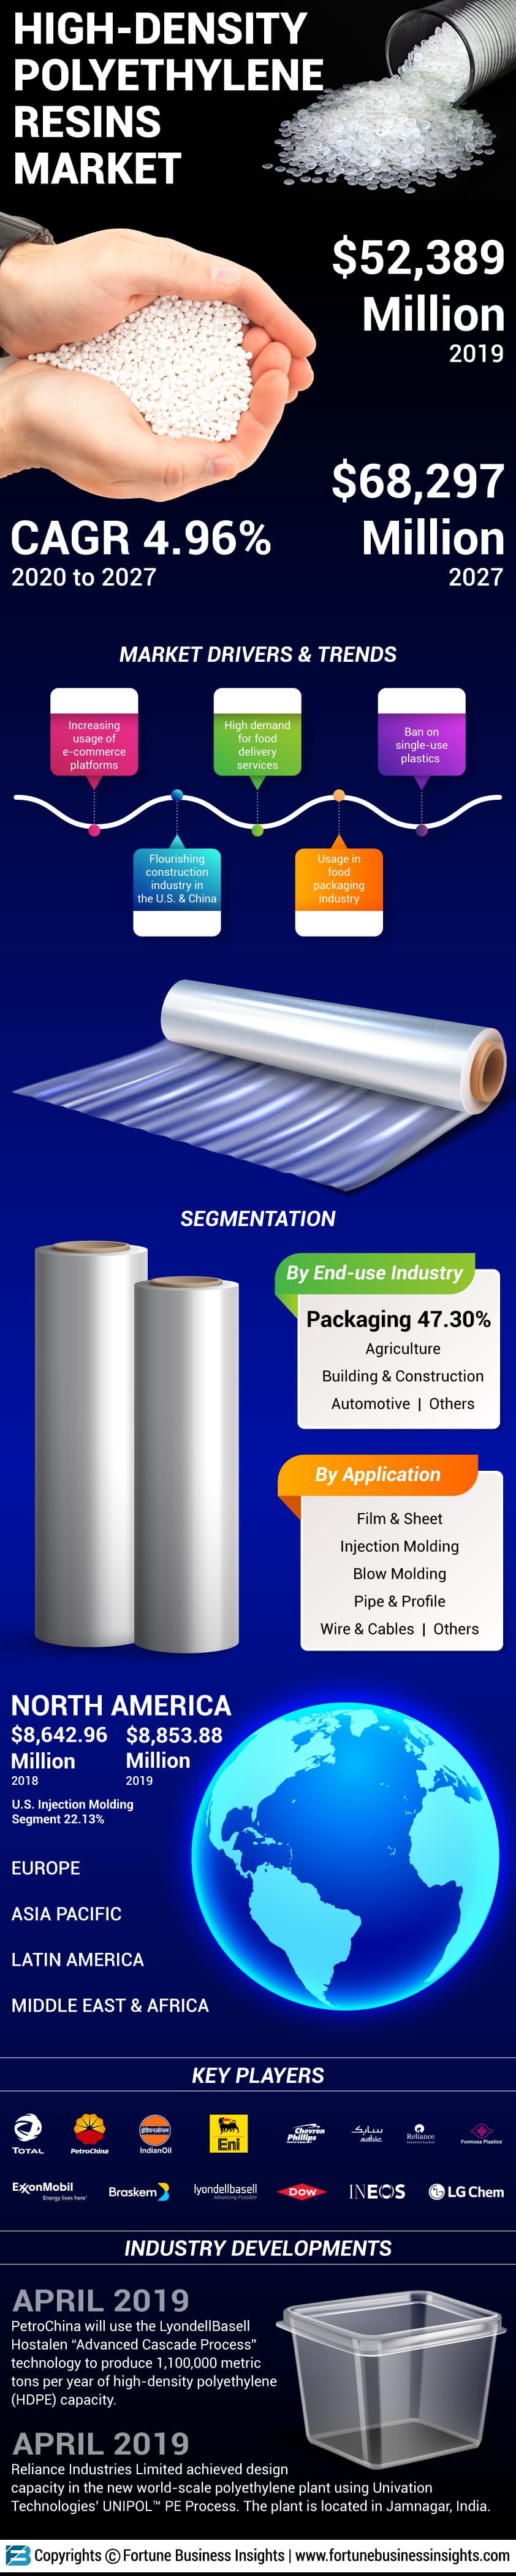 High-Density Polyethylene (HDPE) Resins Market